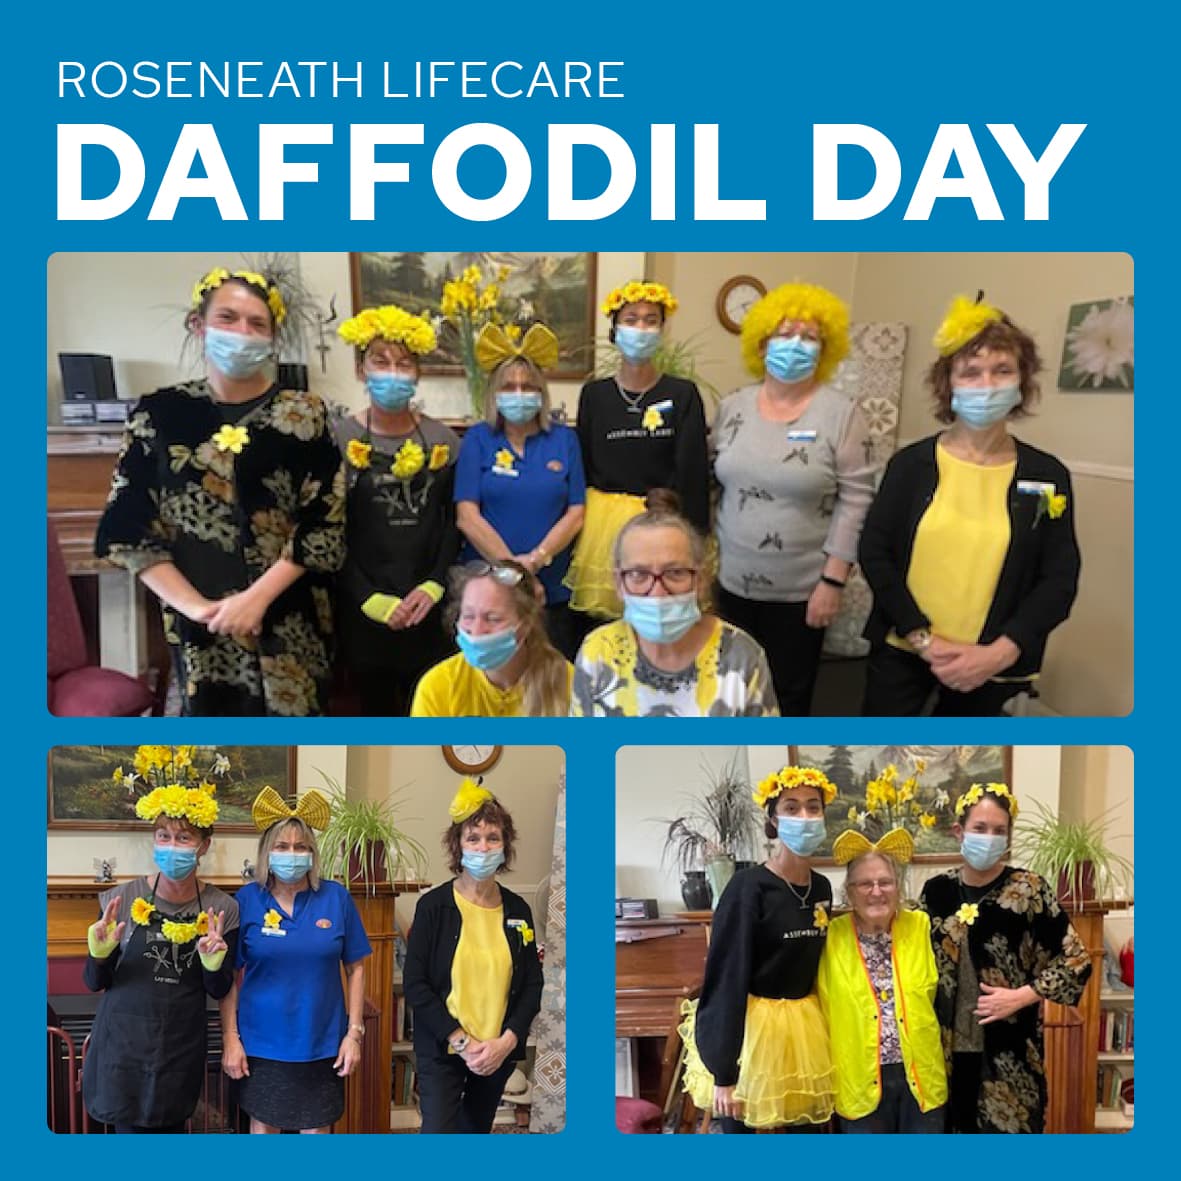 Roseneath celebrates Daffodil Day